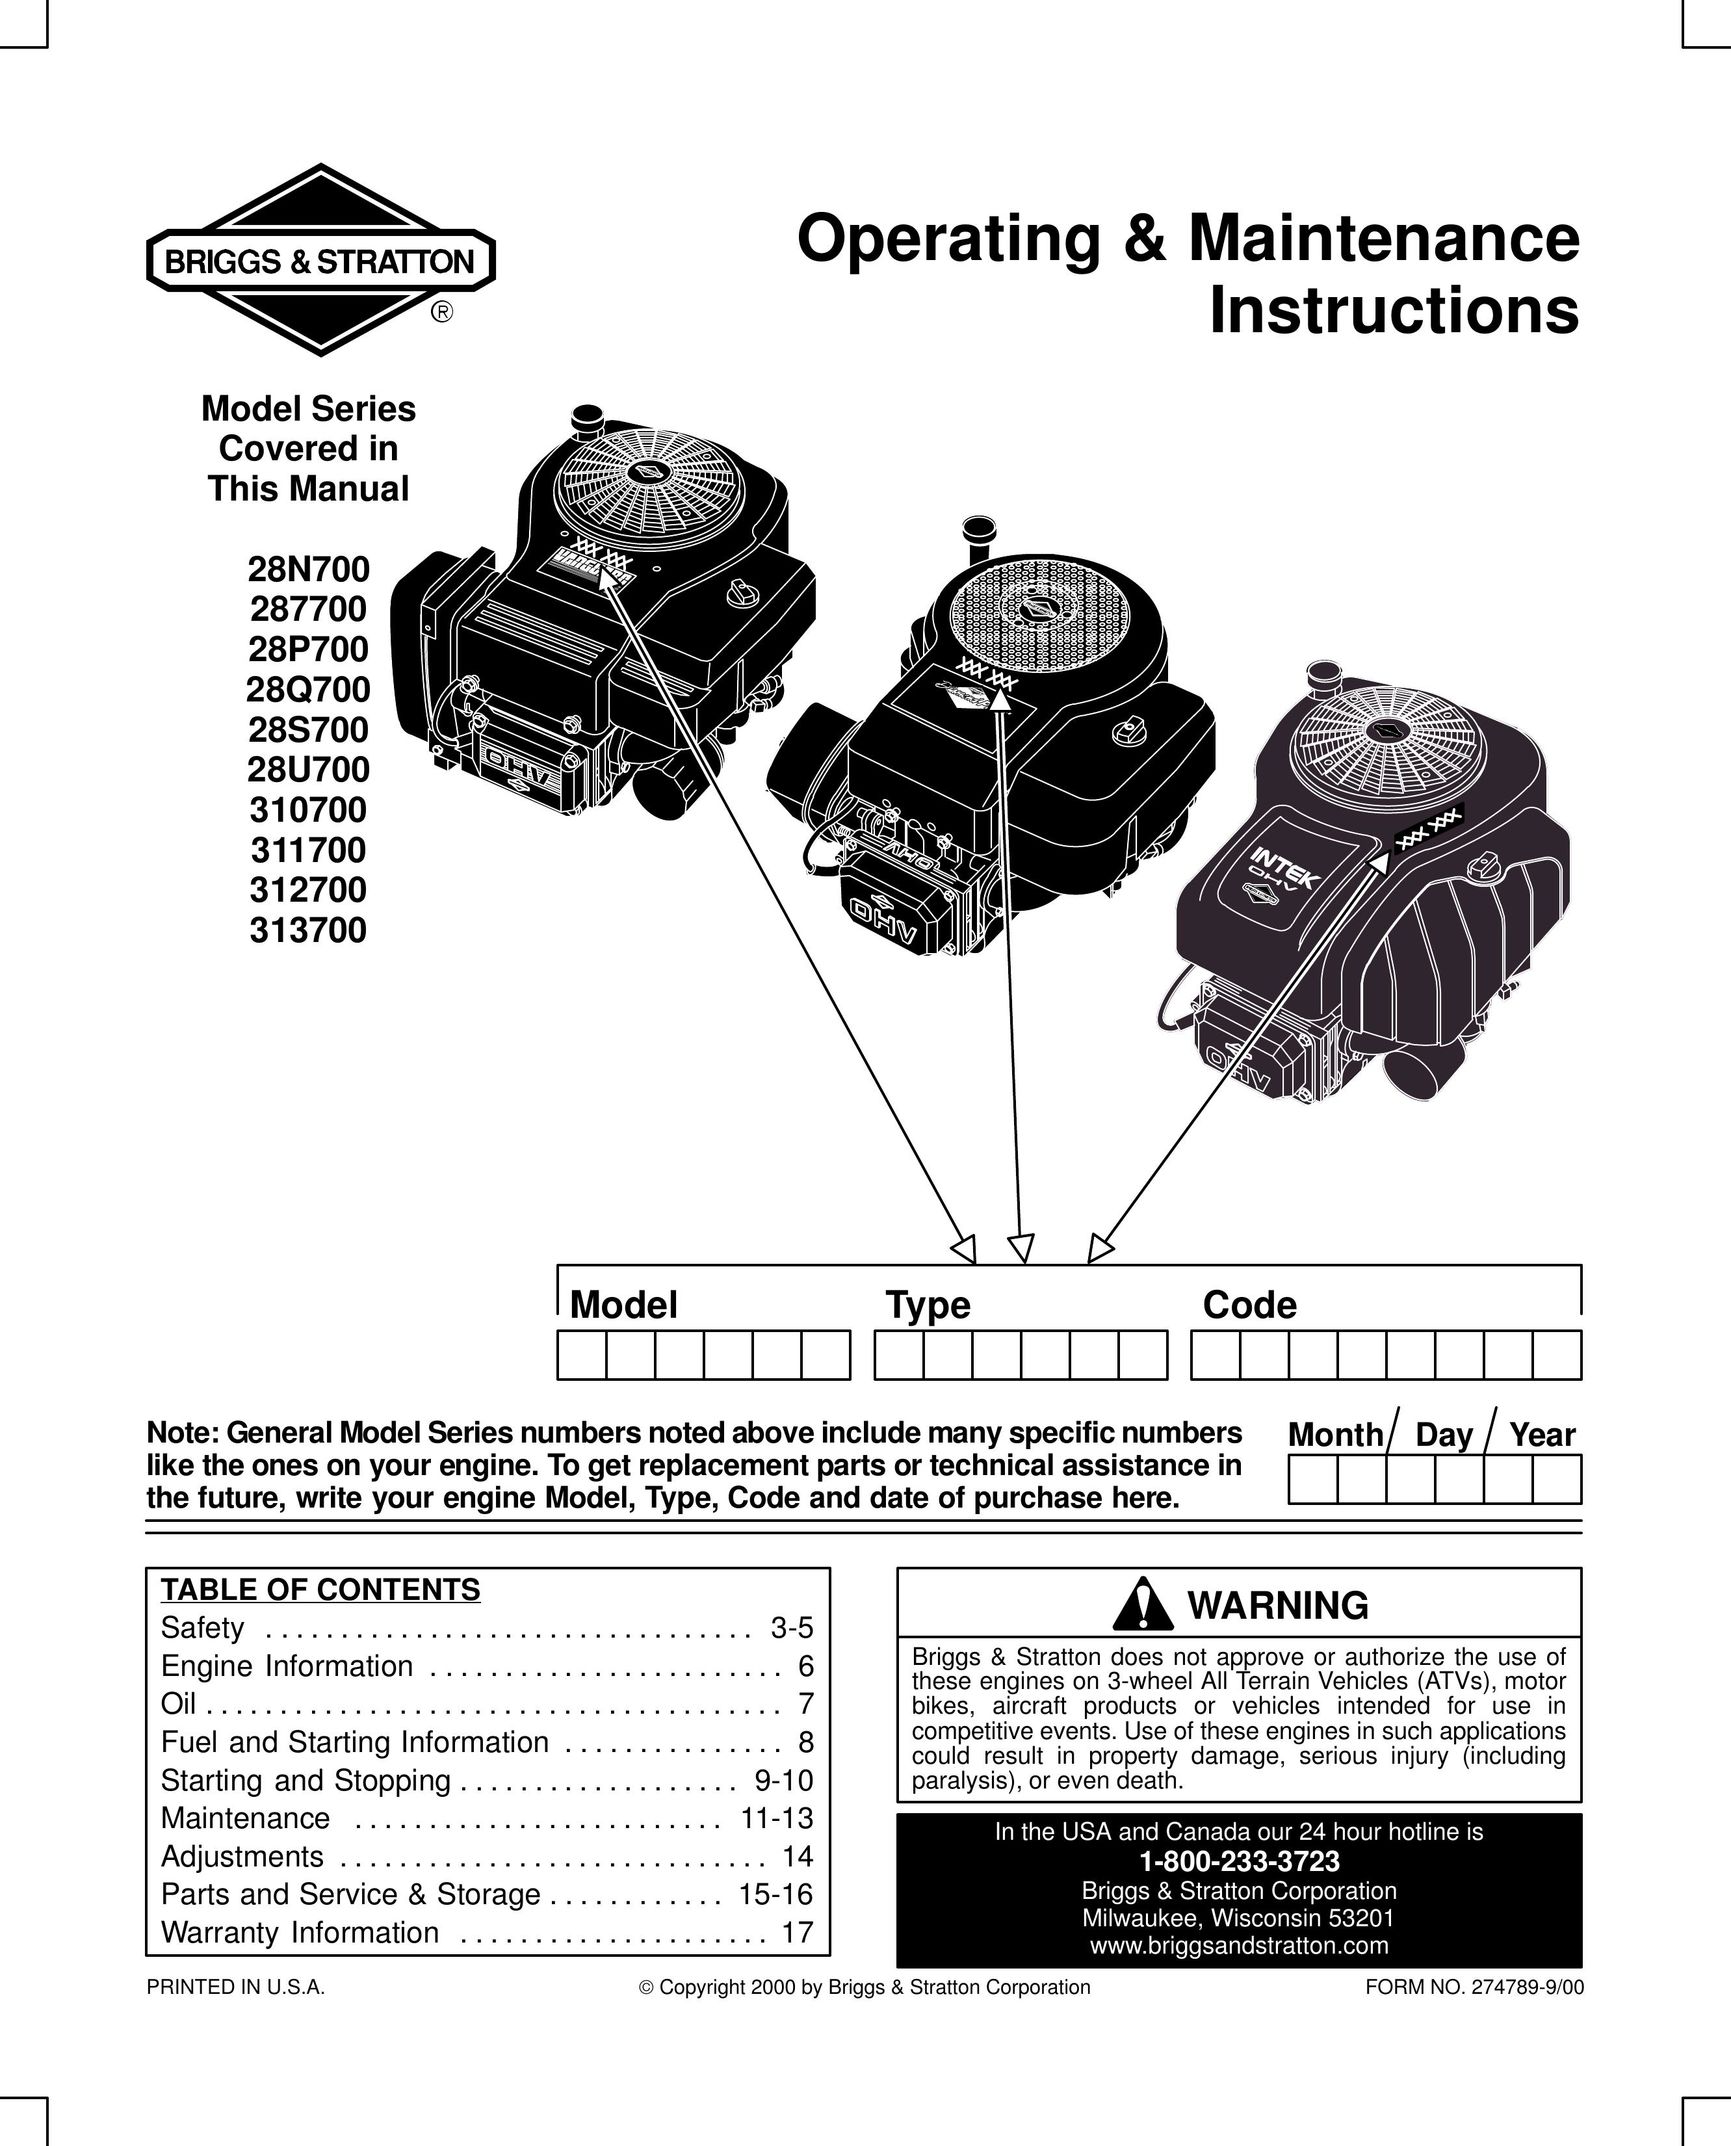 Briggs & Stratton 313700 Air Cleaner User Manual